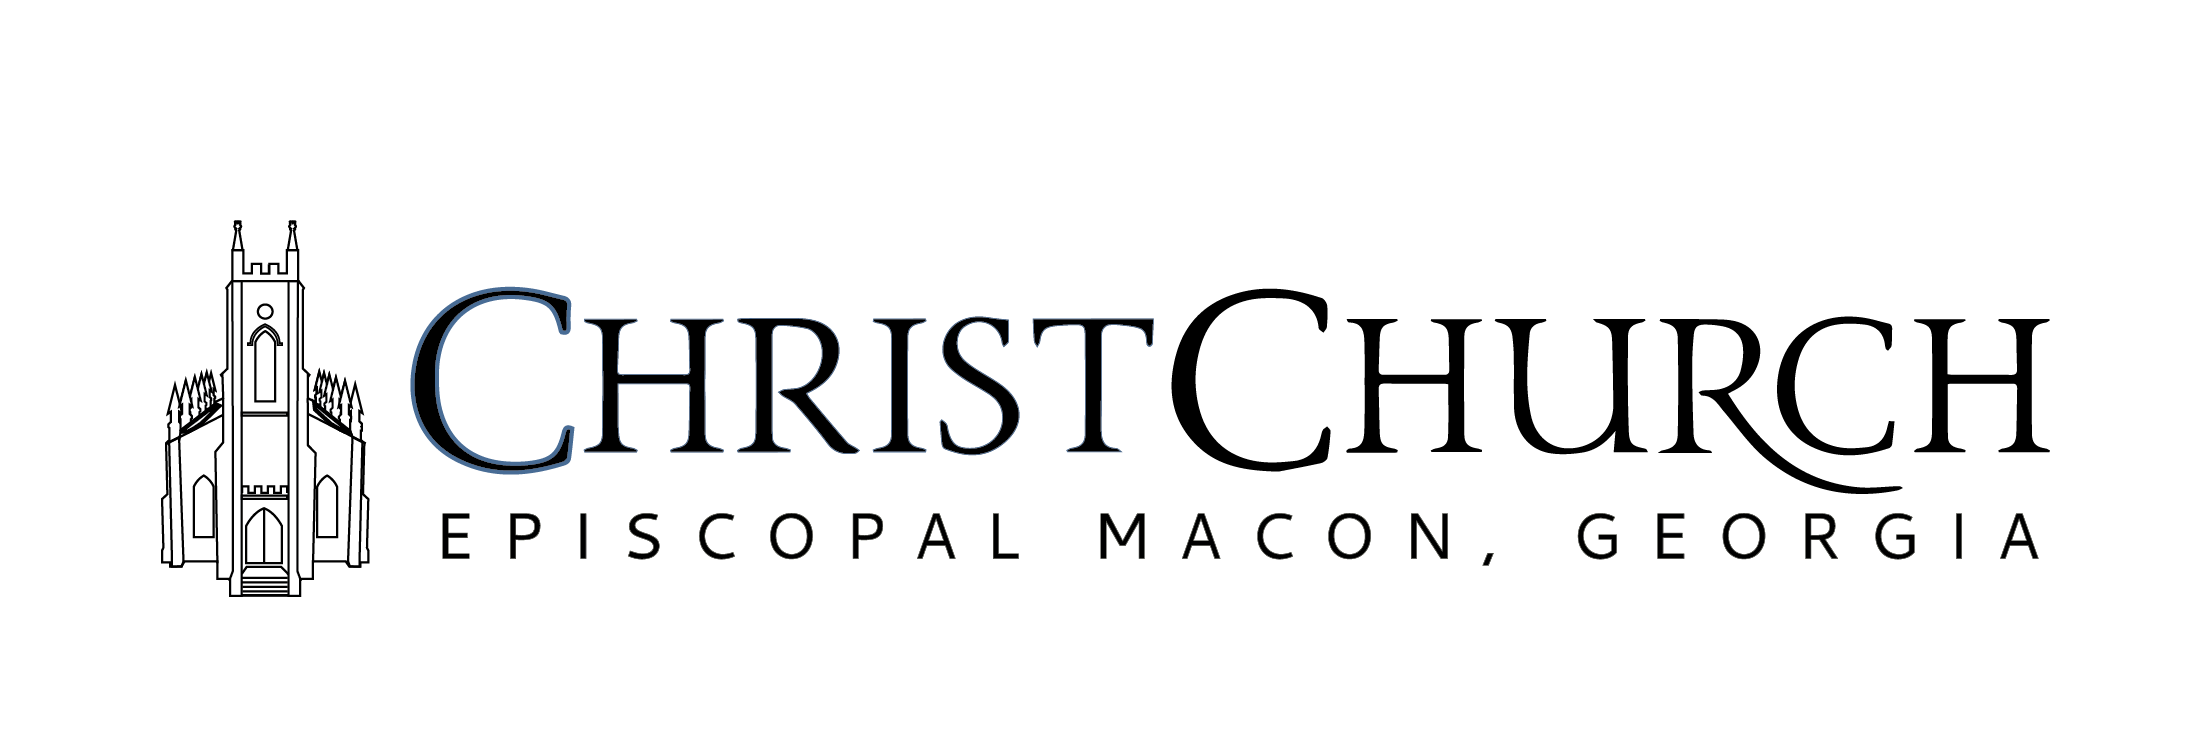 logo for Christ Church Episcopal in Macon, Georgia